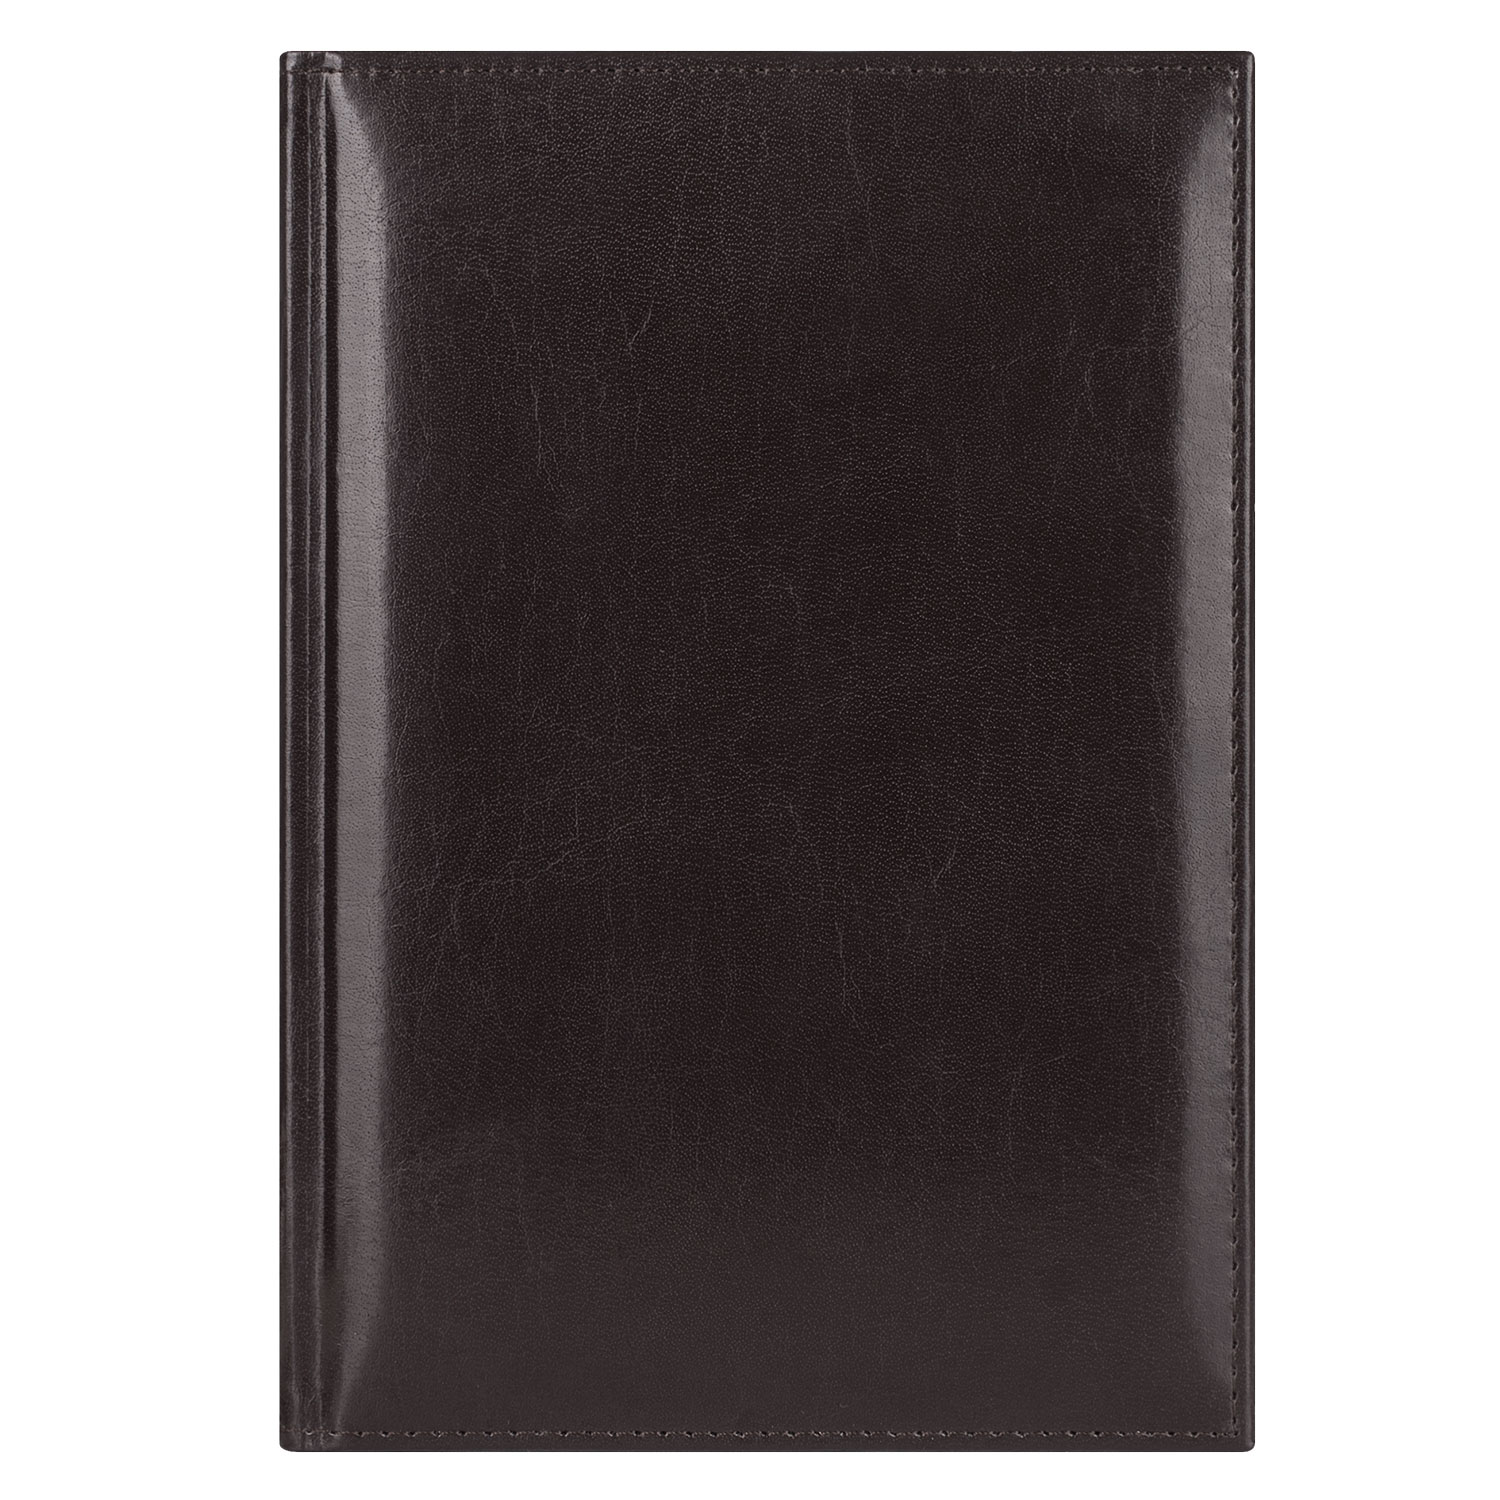 Артикул: A21601.020 — Ежедневник недатированный Madrid, 145x205, натур.кожа, темно-коричневый, подарочная коробка